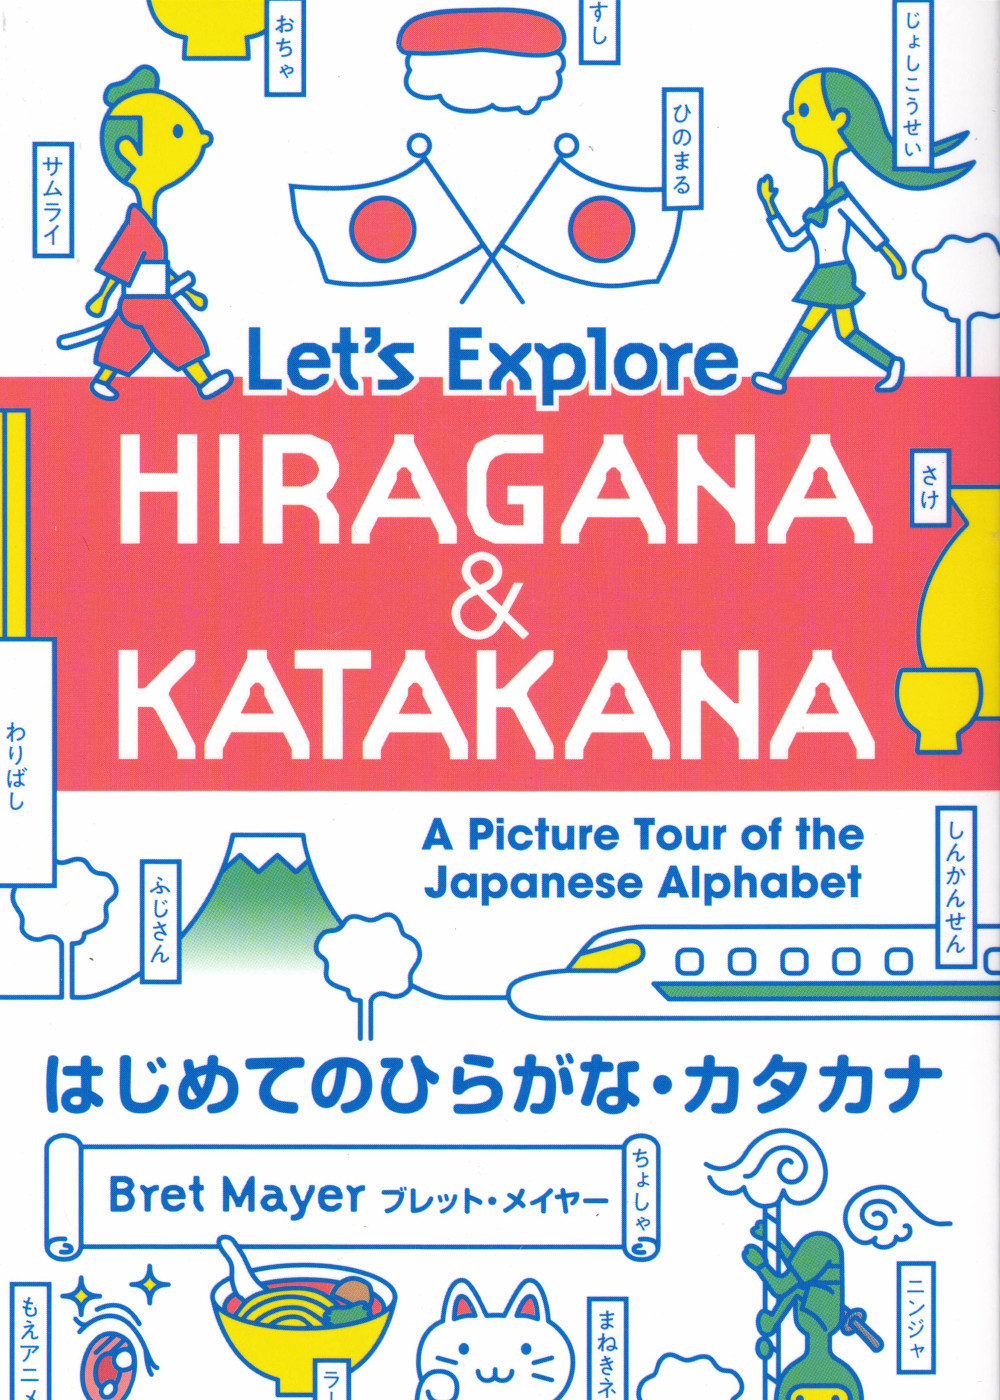 Let's Explore Hiragana & Katakana